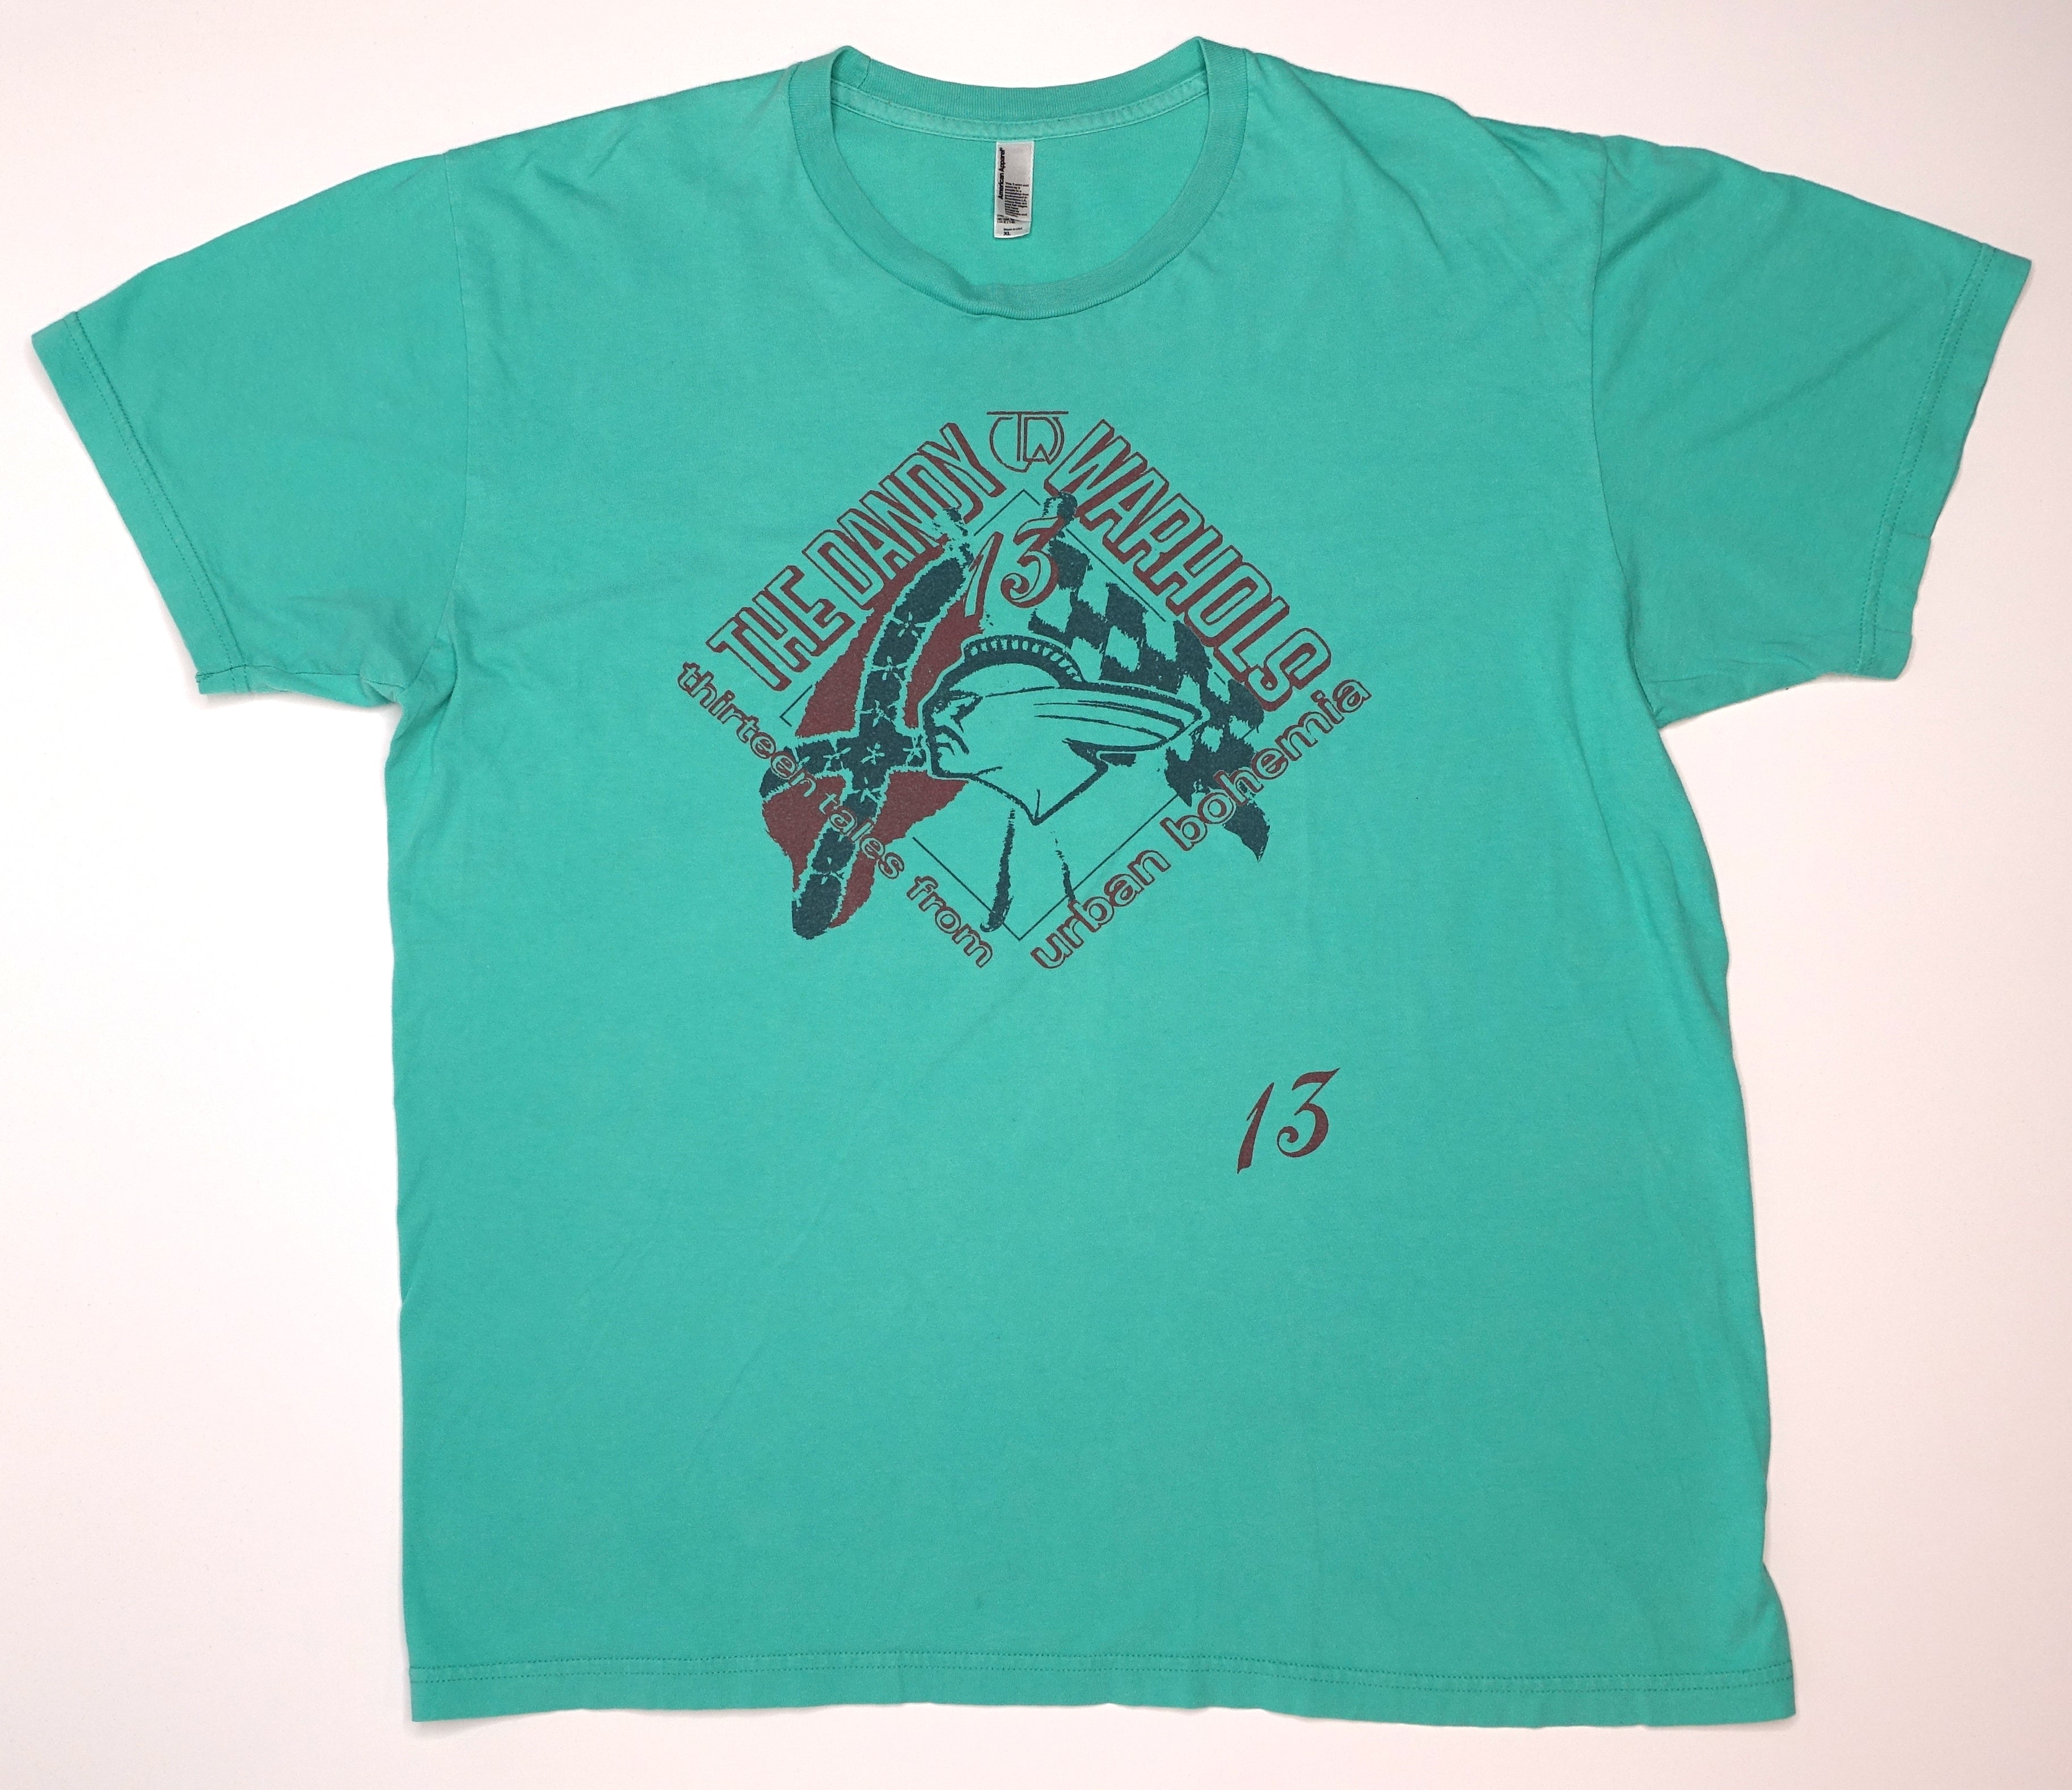 the Dandy Warhols - 13 Tales From Urban Bohemia 2000 Tour Shirt Size XL